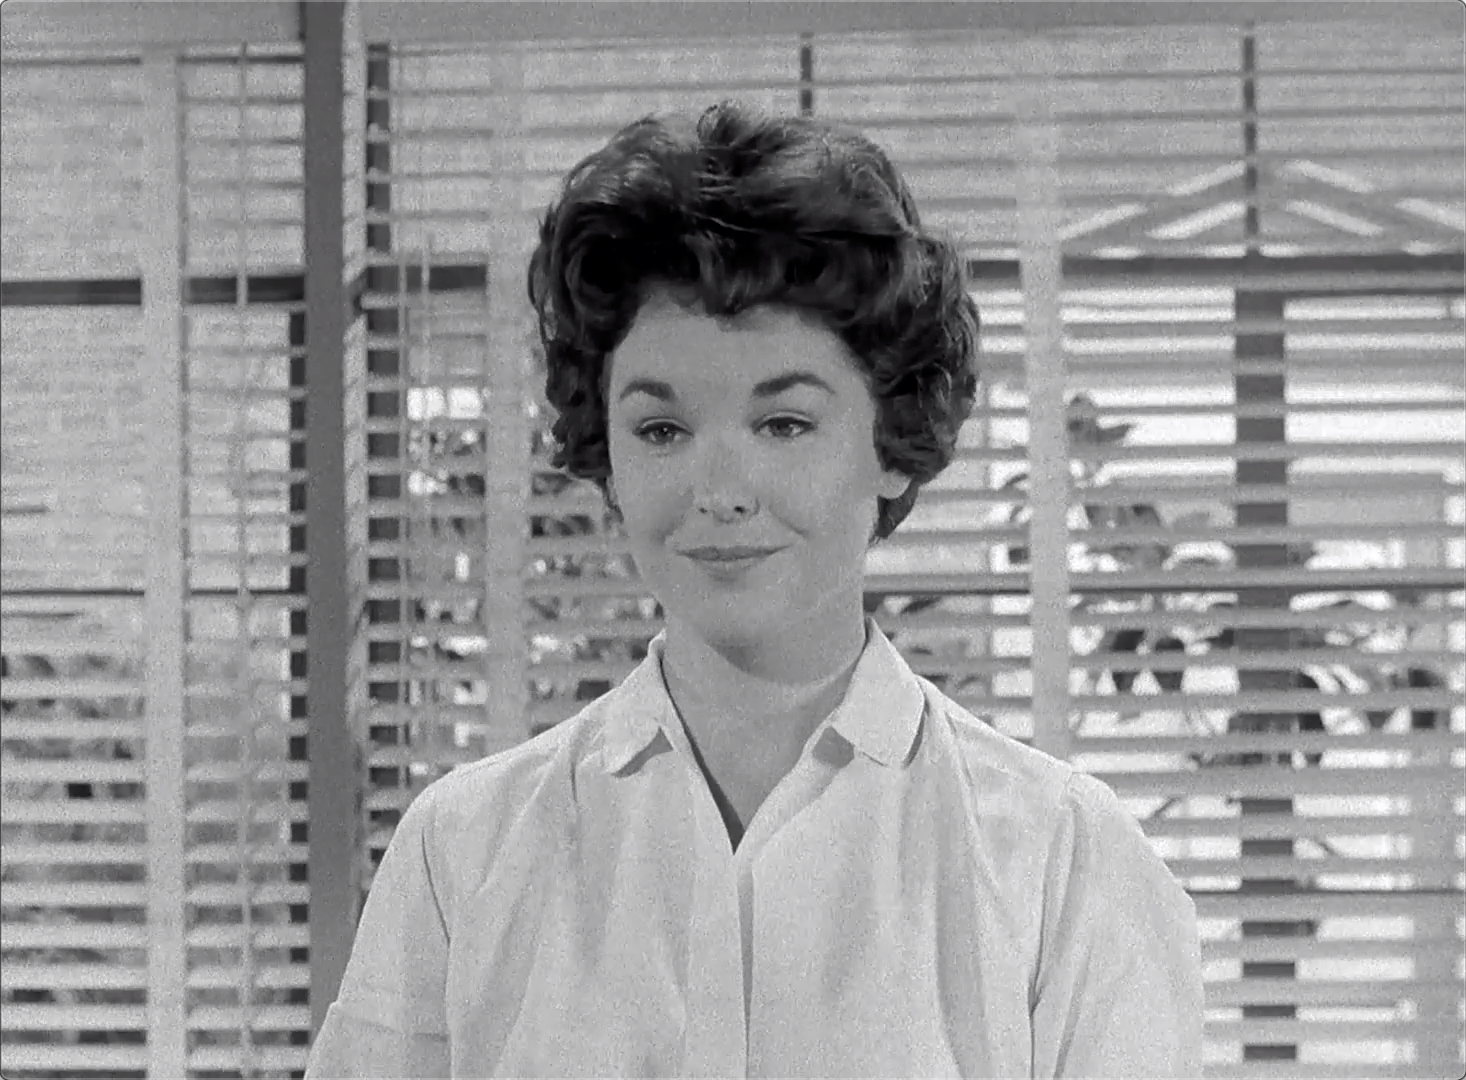 Leave it to Beaver S02E39 Most interesting Character (Jun.25.1959)-15.jpg